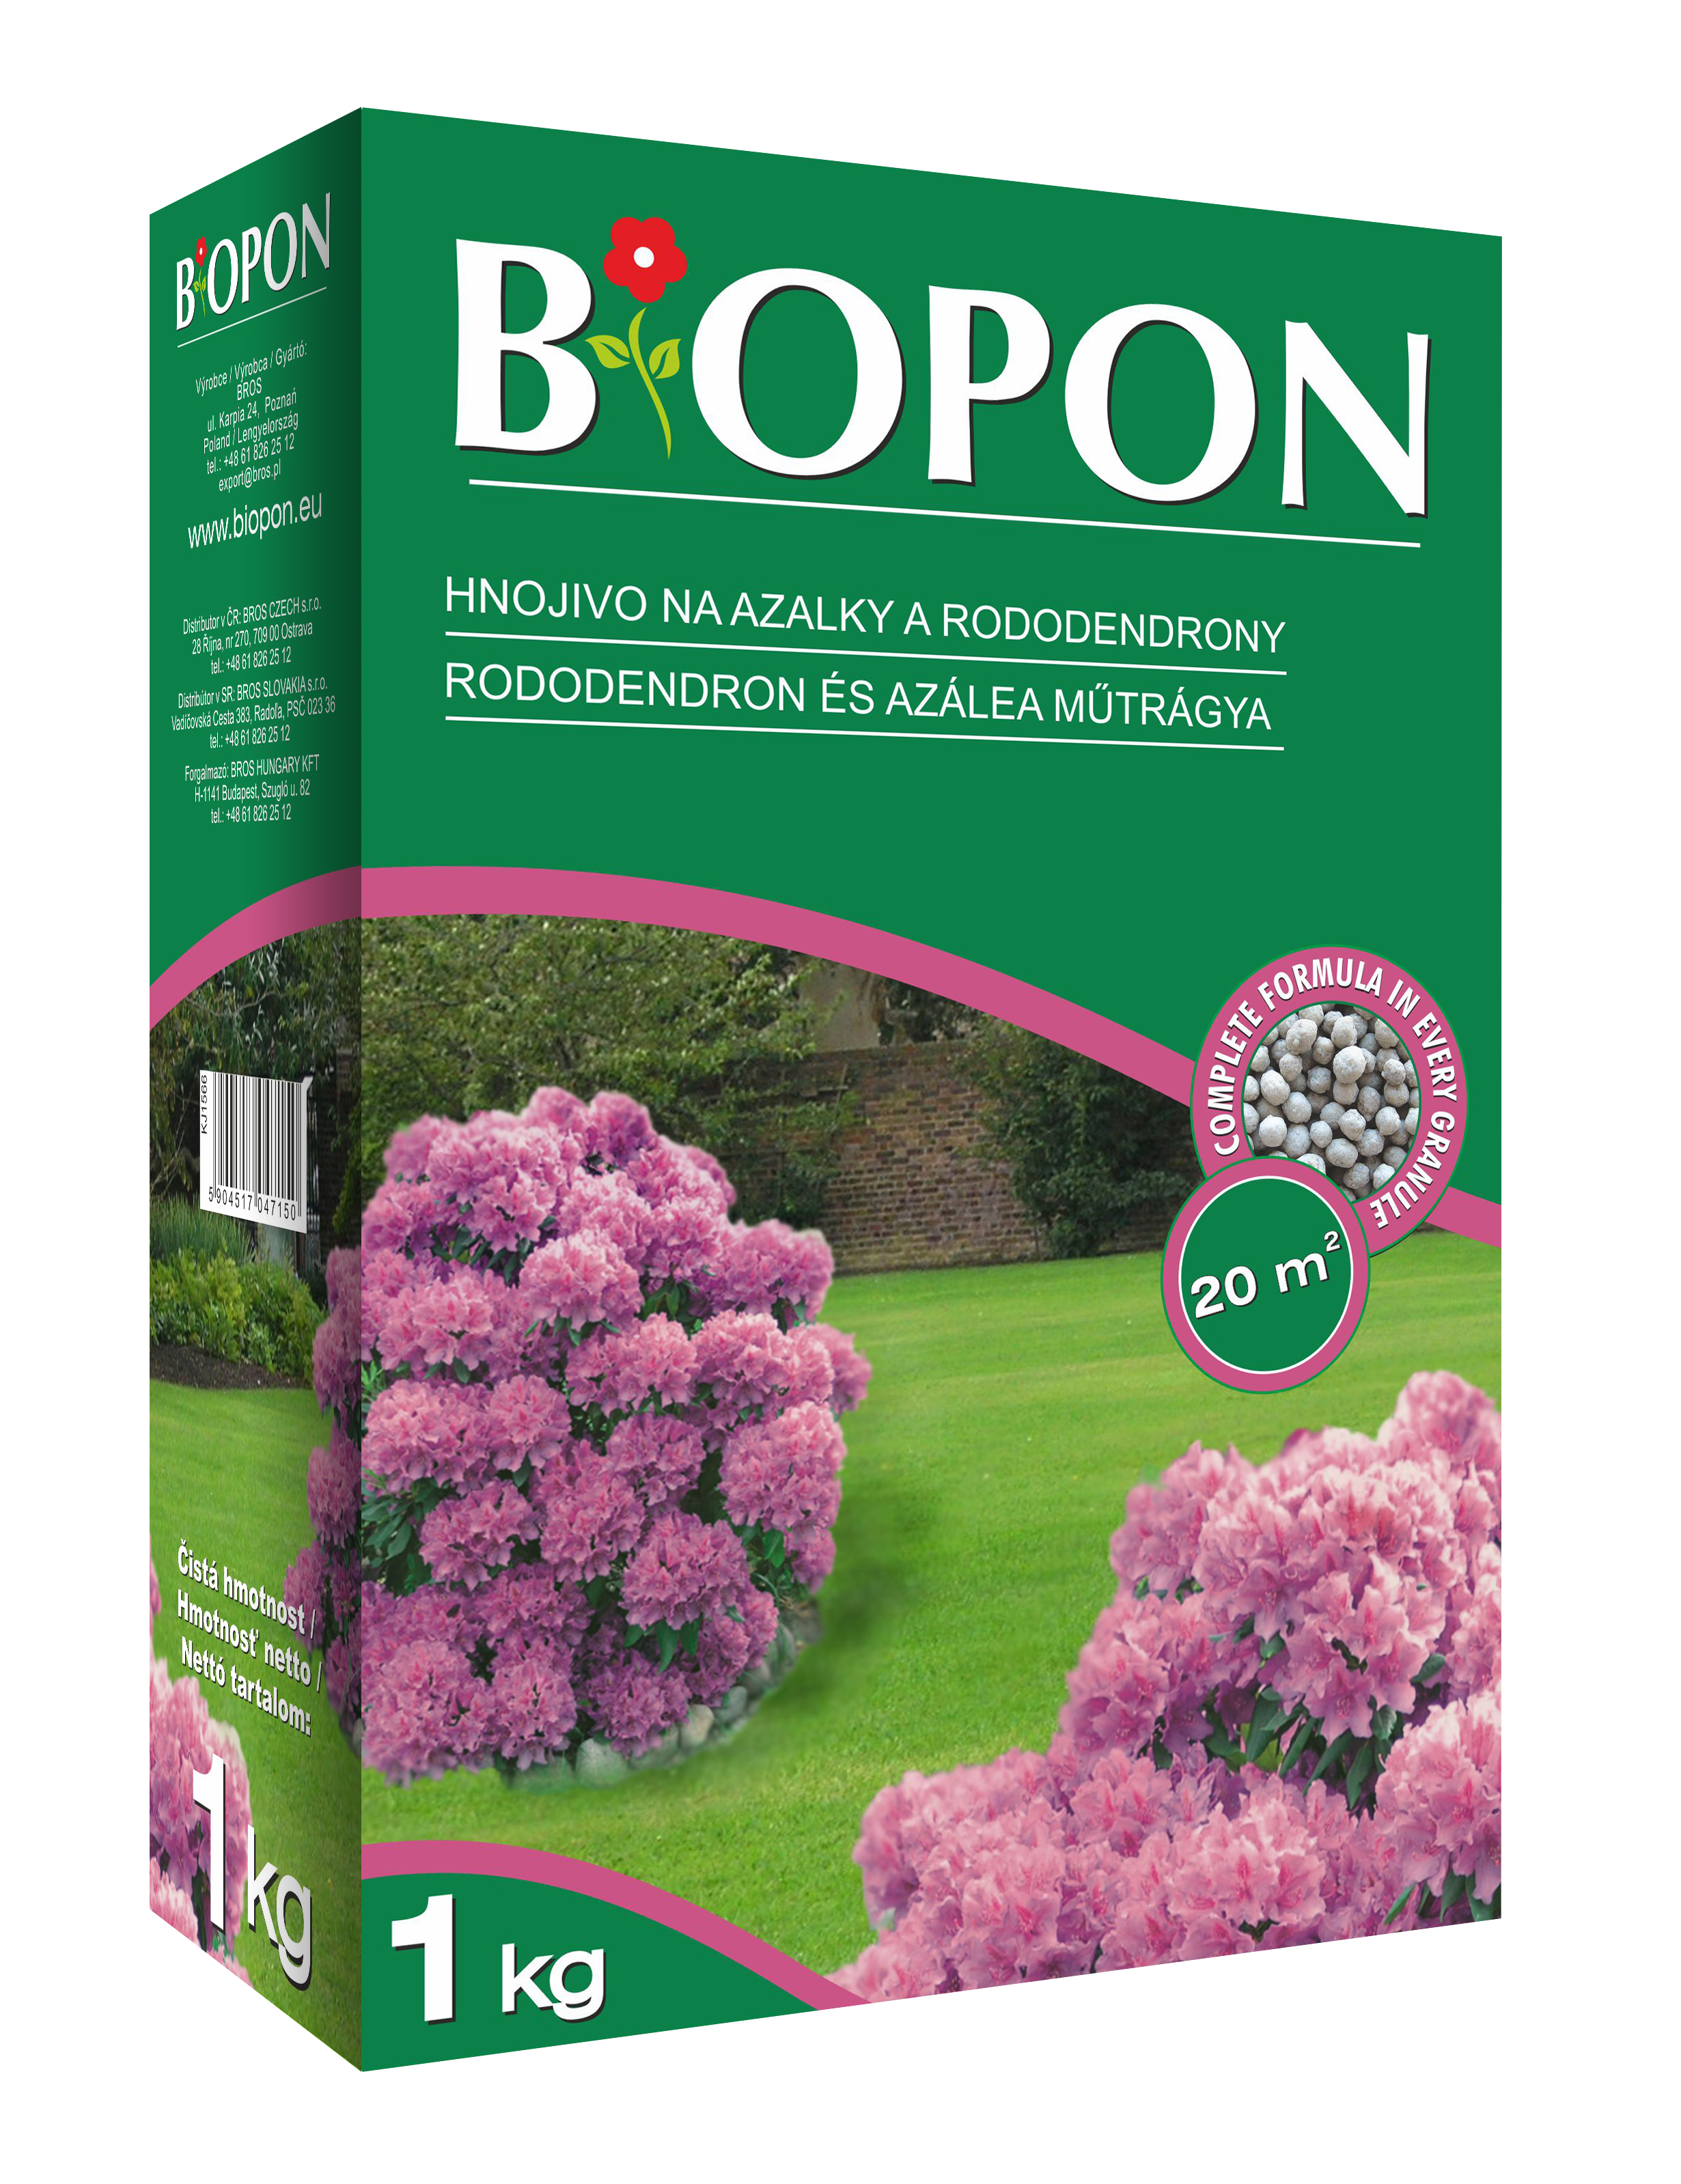 Biopon műtrágya rhododendronhoz 1 kg